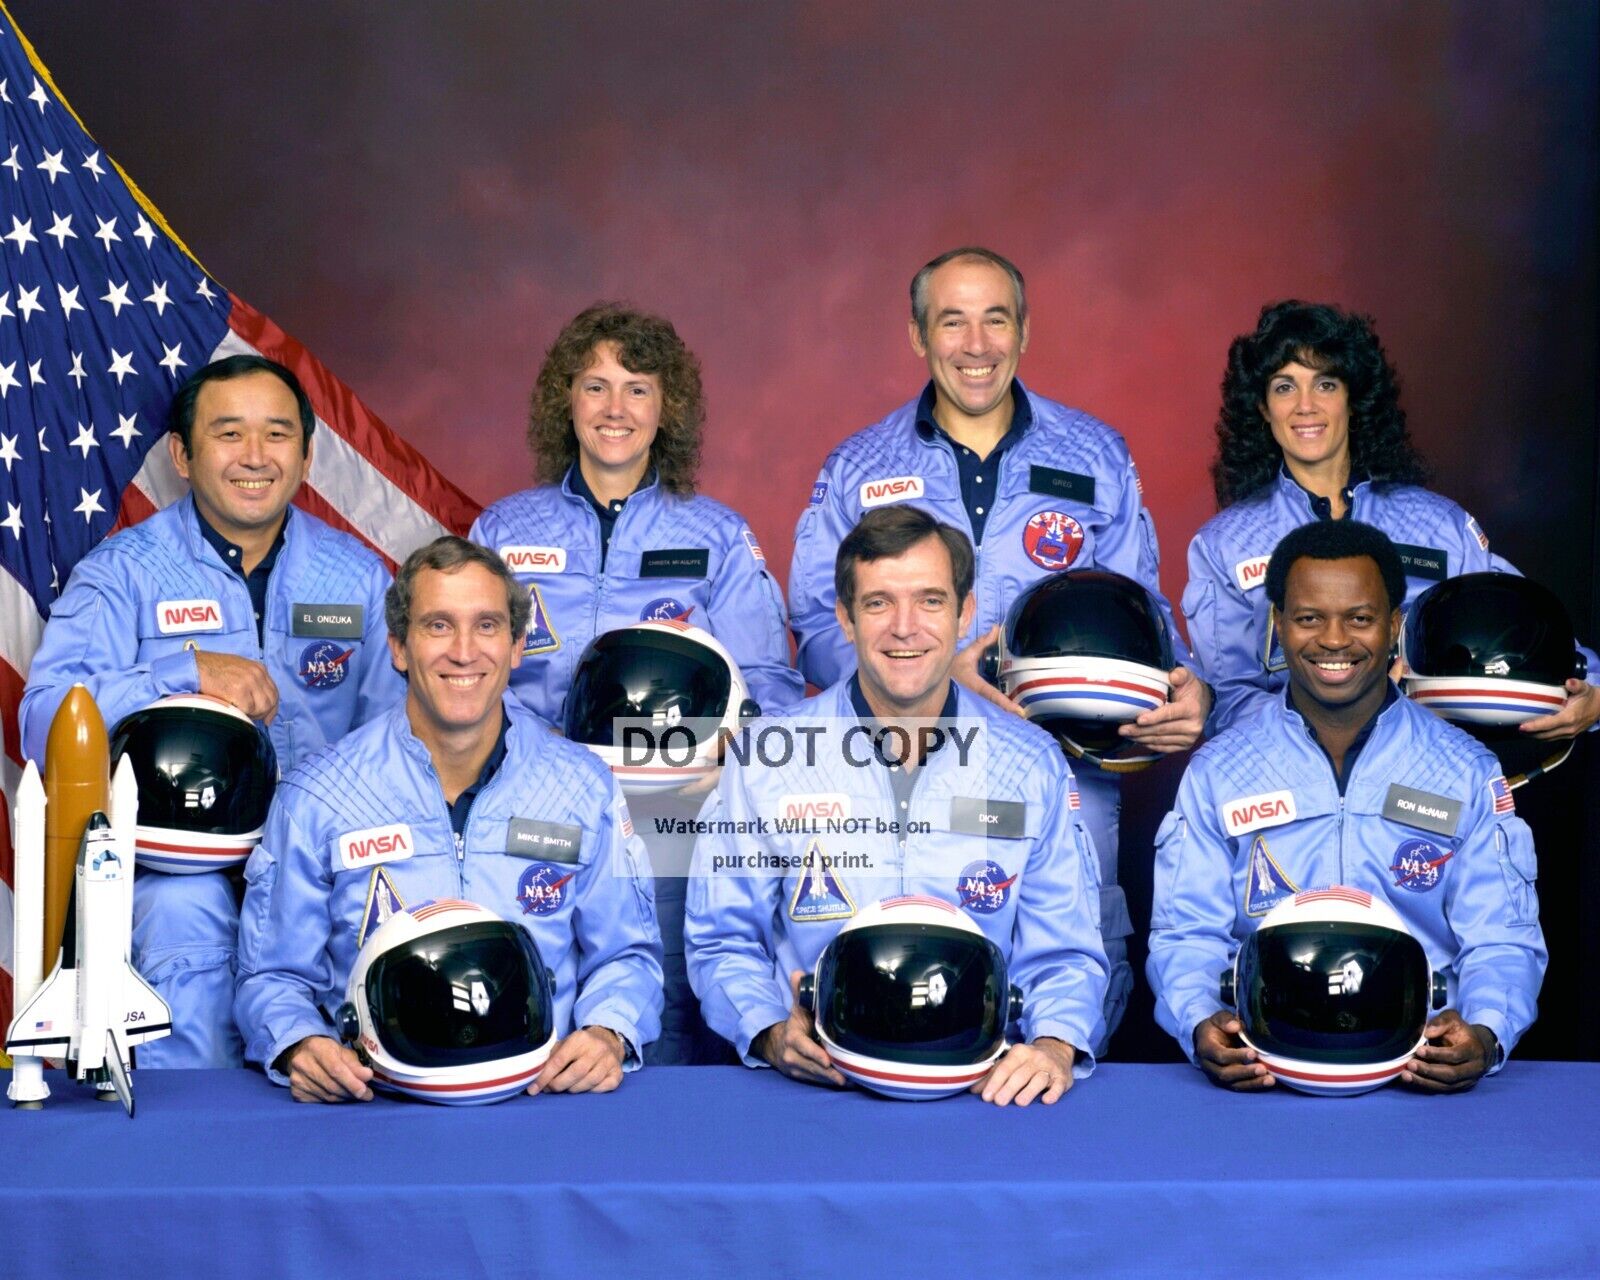 SPACE SHUTTLE CHALLENGER CREW PORTRAIT STS-51L MISSION  8X10 NASA PHOTO (EP-423)